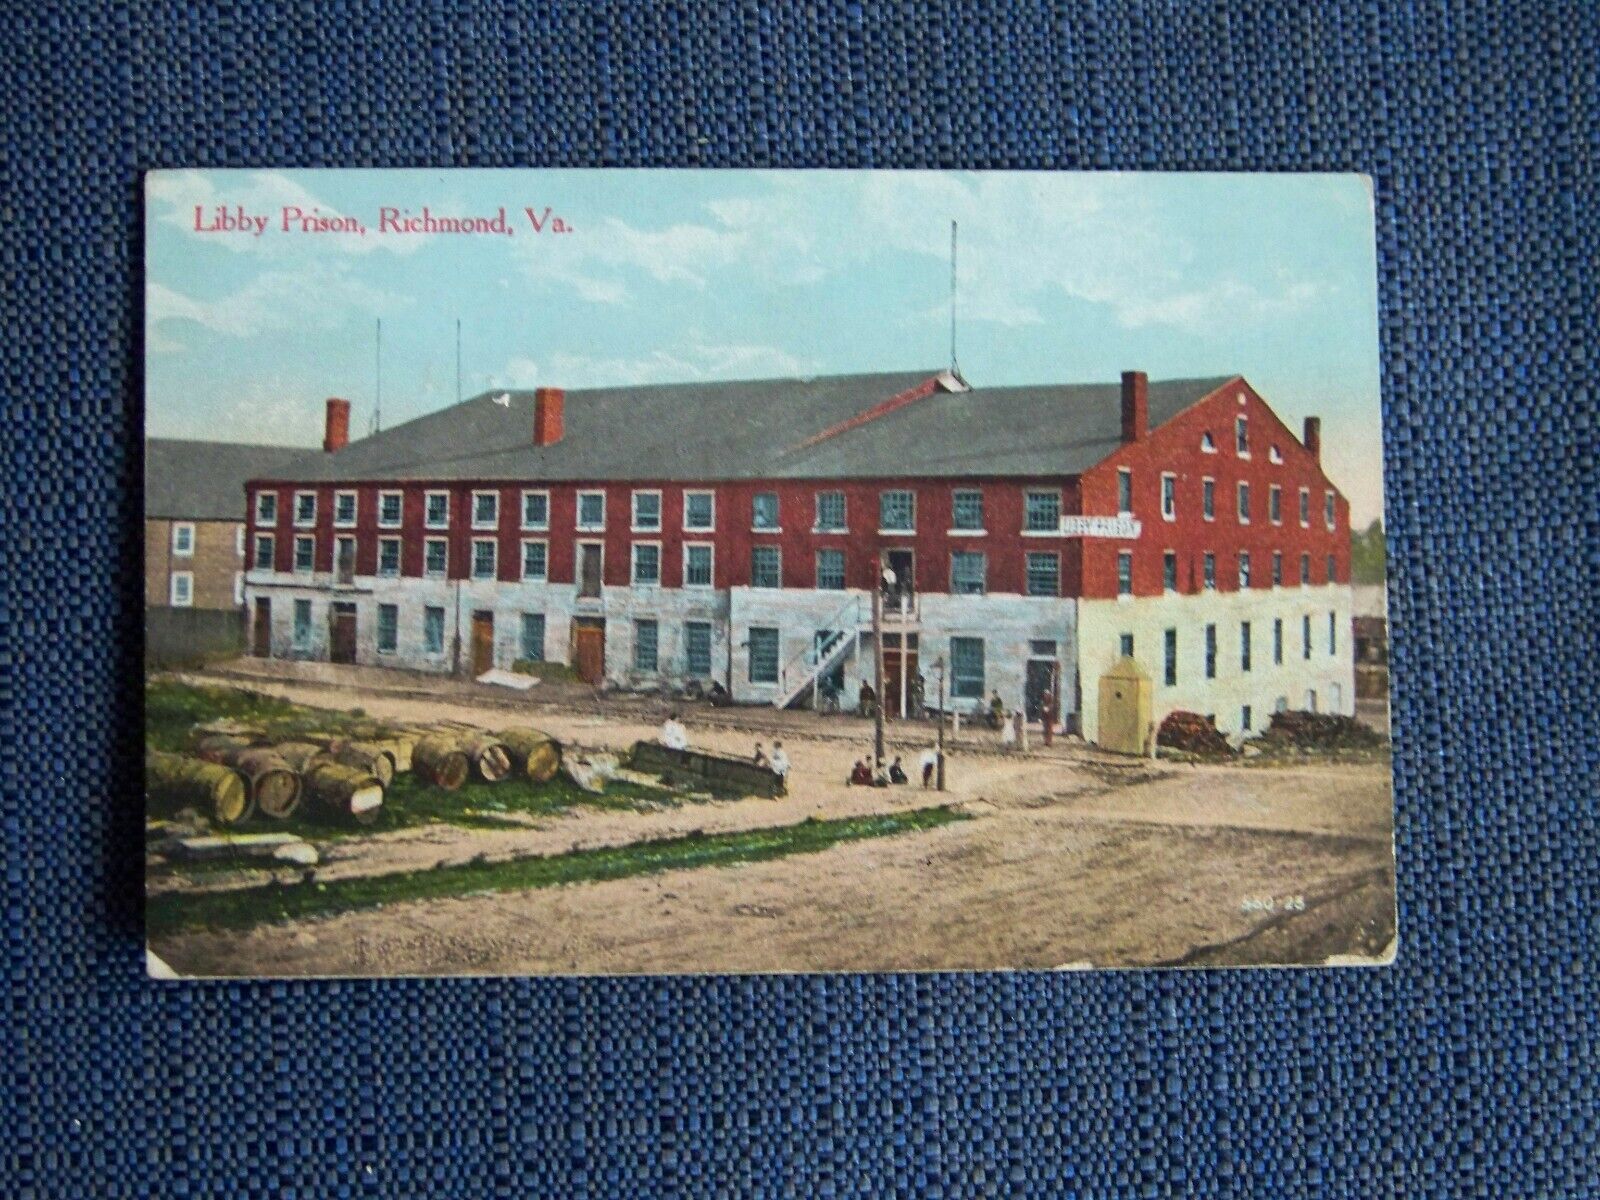 Richmond Virginia VA Libby Prison 1913 to Luke Maryland